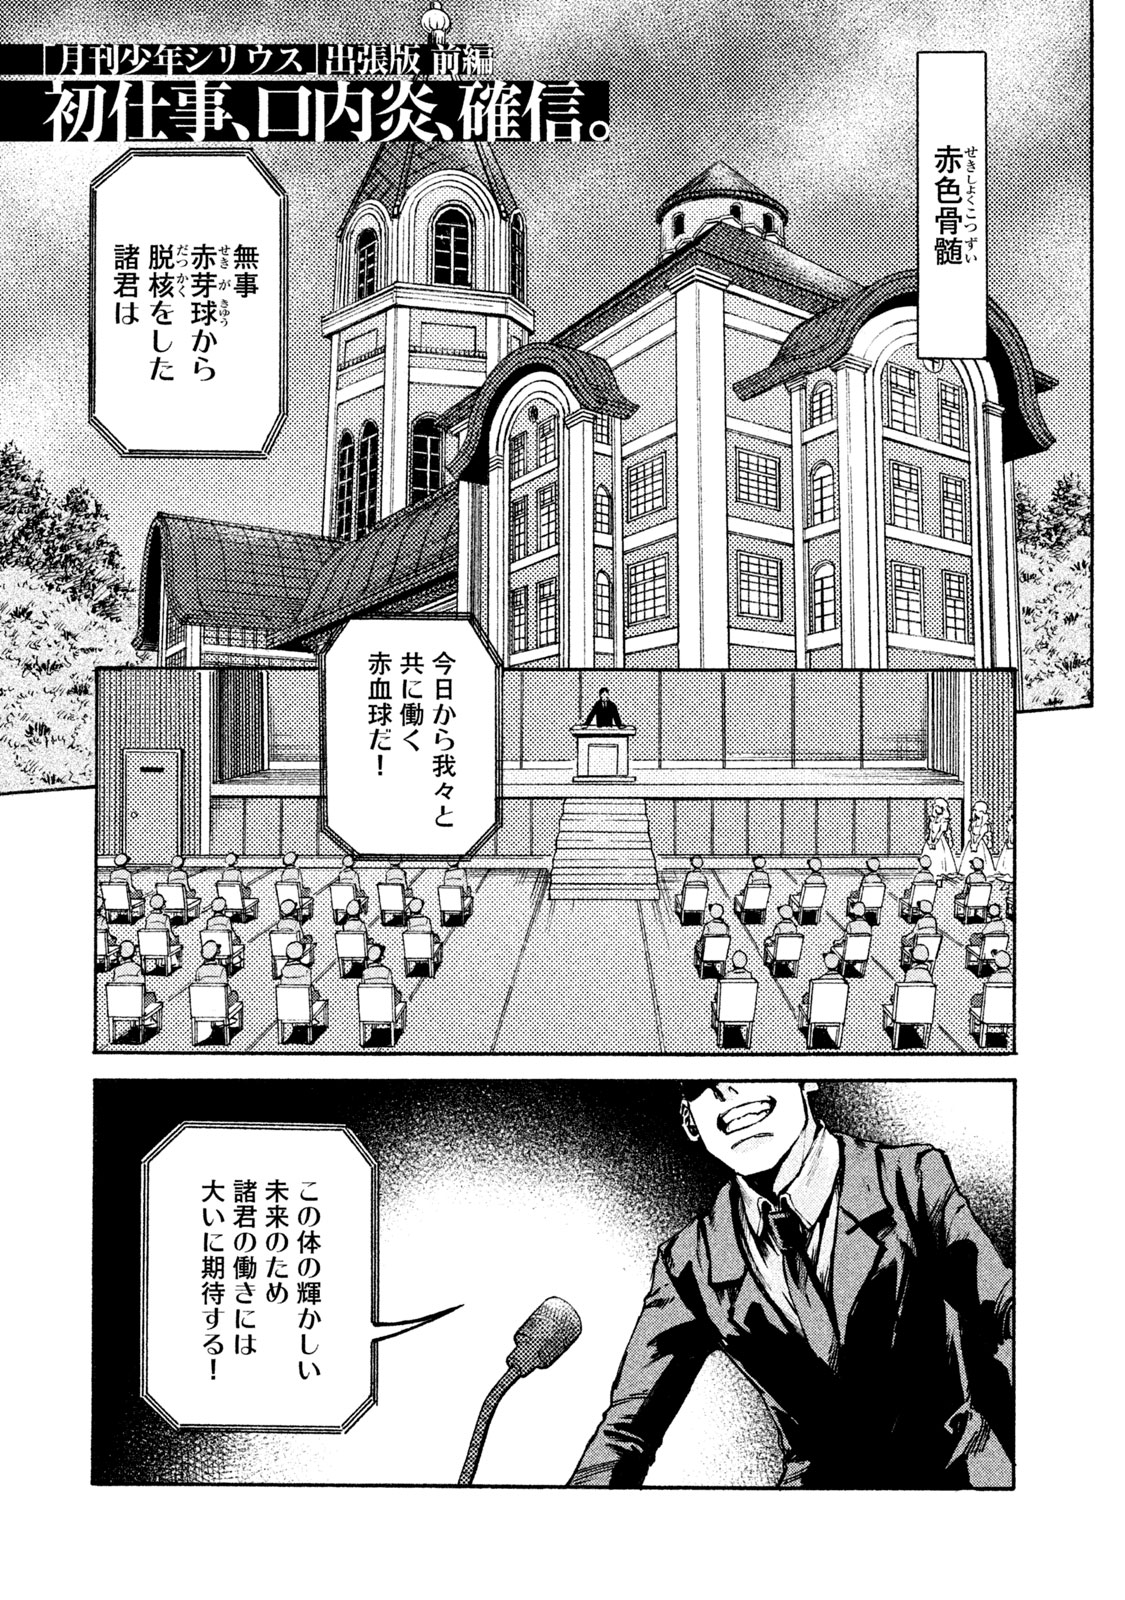 Hataraku Saibou BLACK - Chapter 24 - Page 21